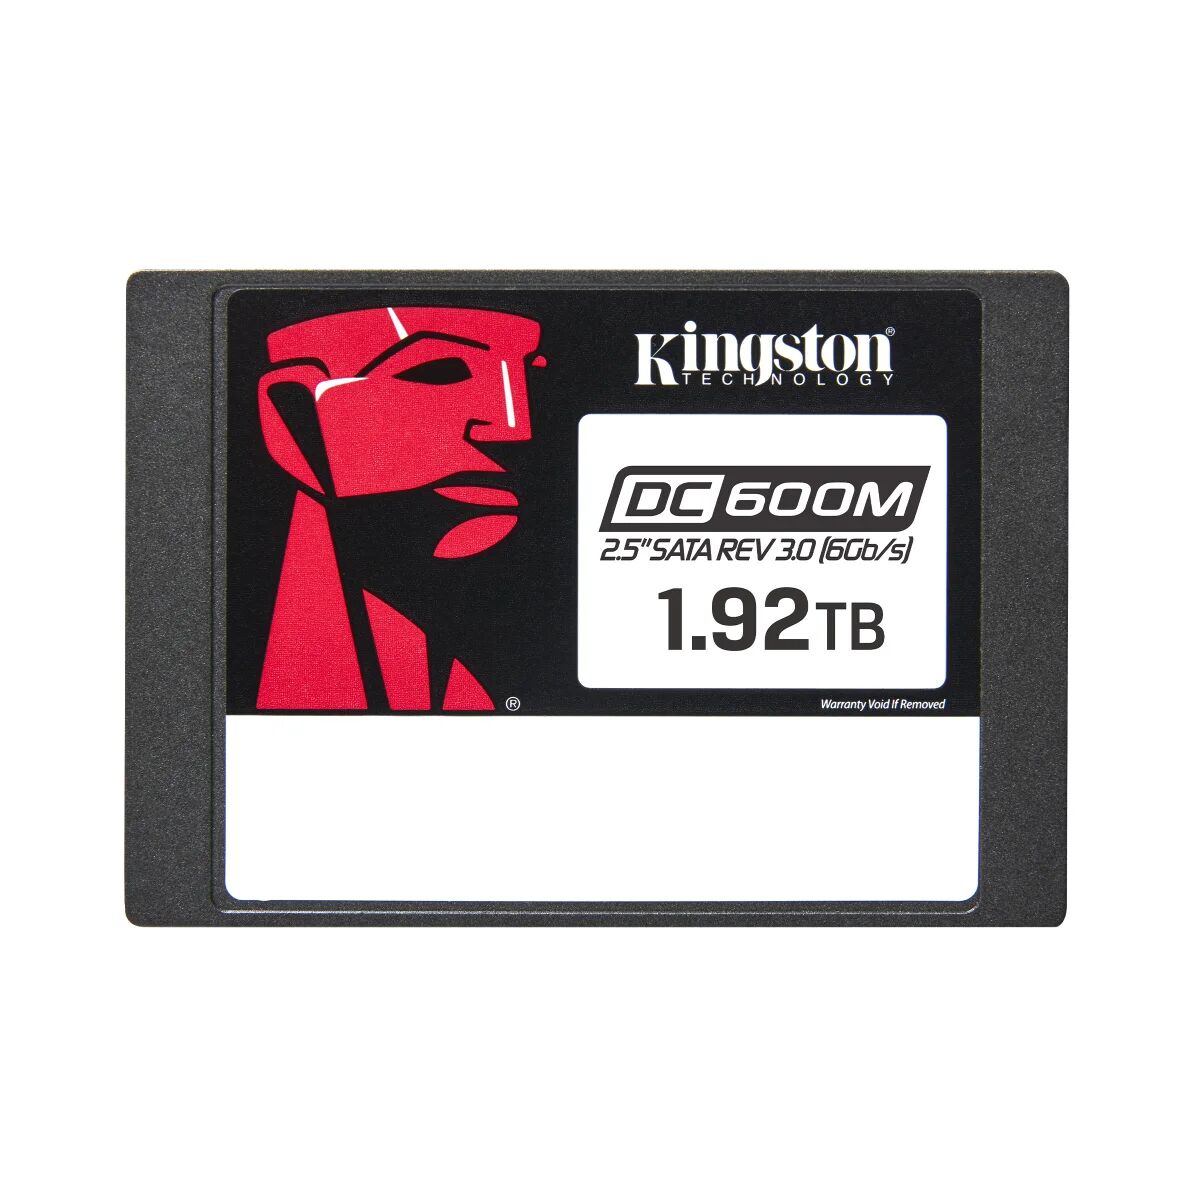 Kingston Drive SSD SATA di classe enterprise DC600M (impiego misto) 2,5" 1920G [SEDC600M/1920G]